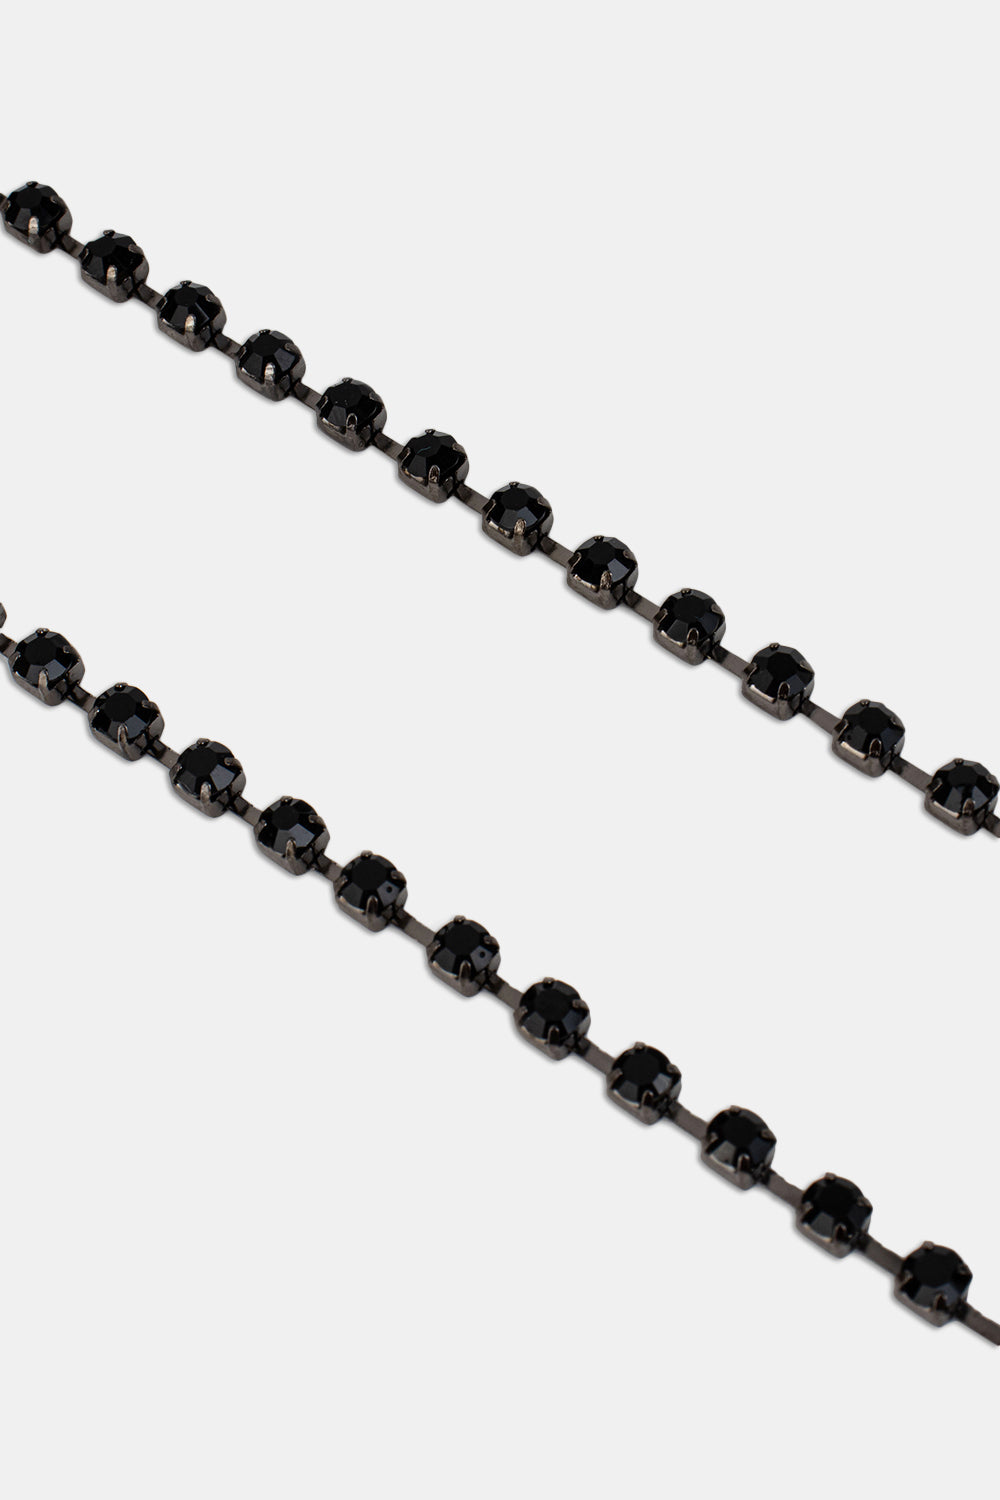 Intimacy Crystal Single Layer Detachable Strap - Black